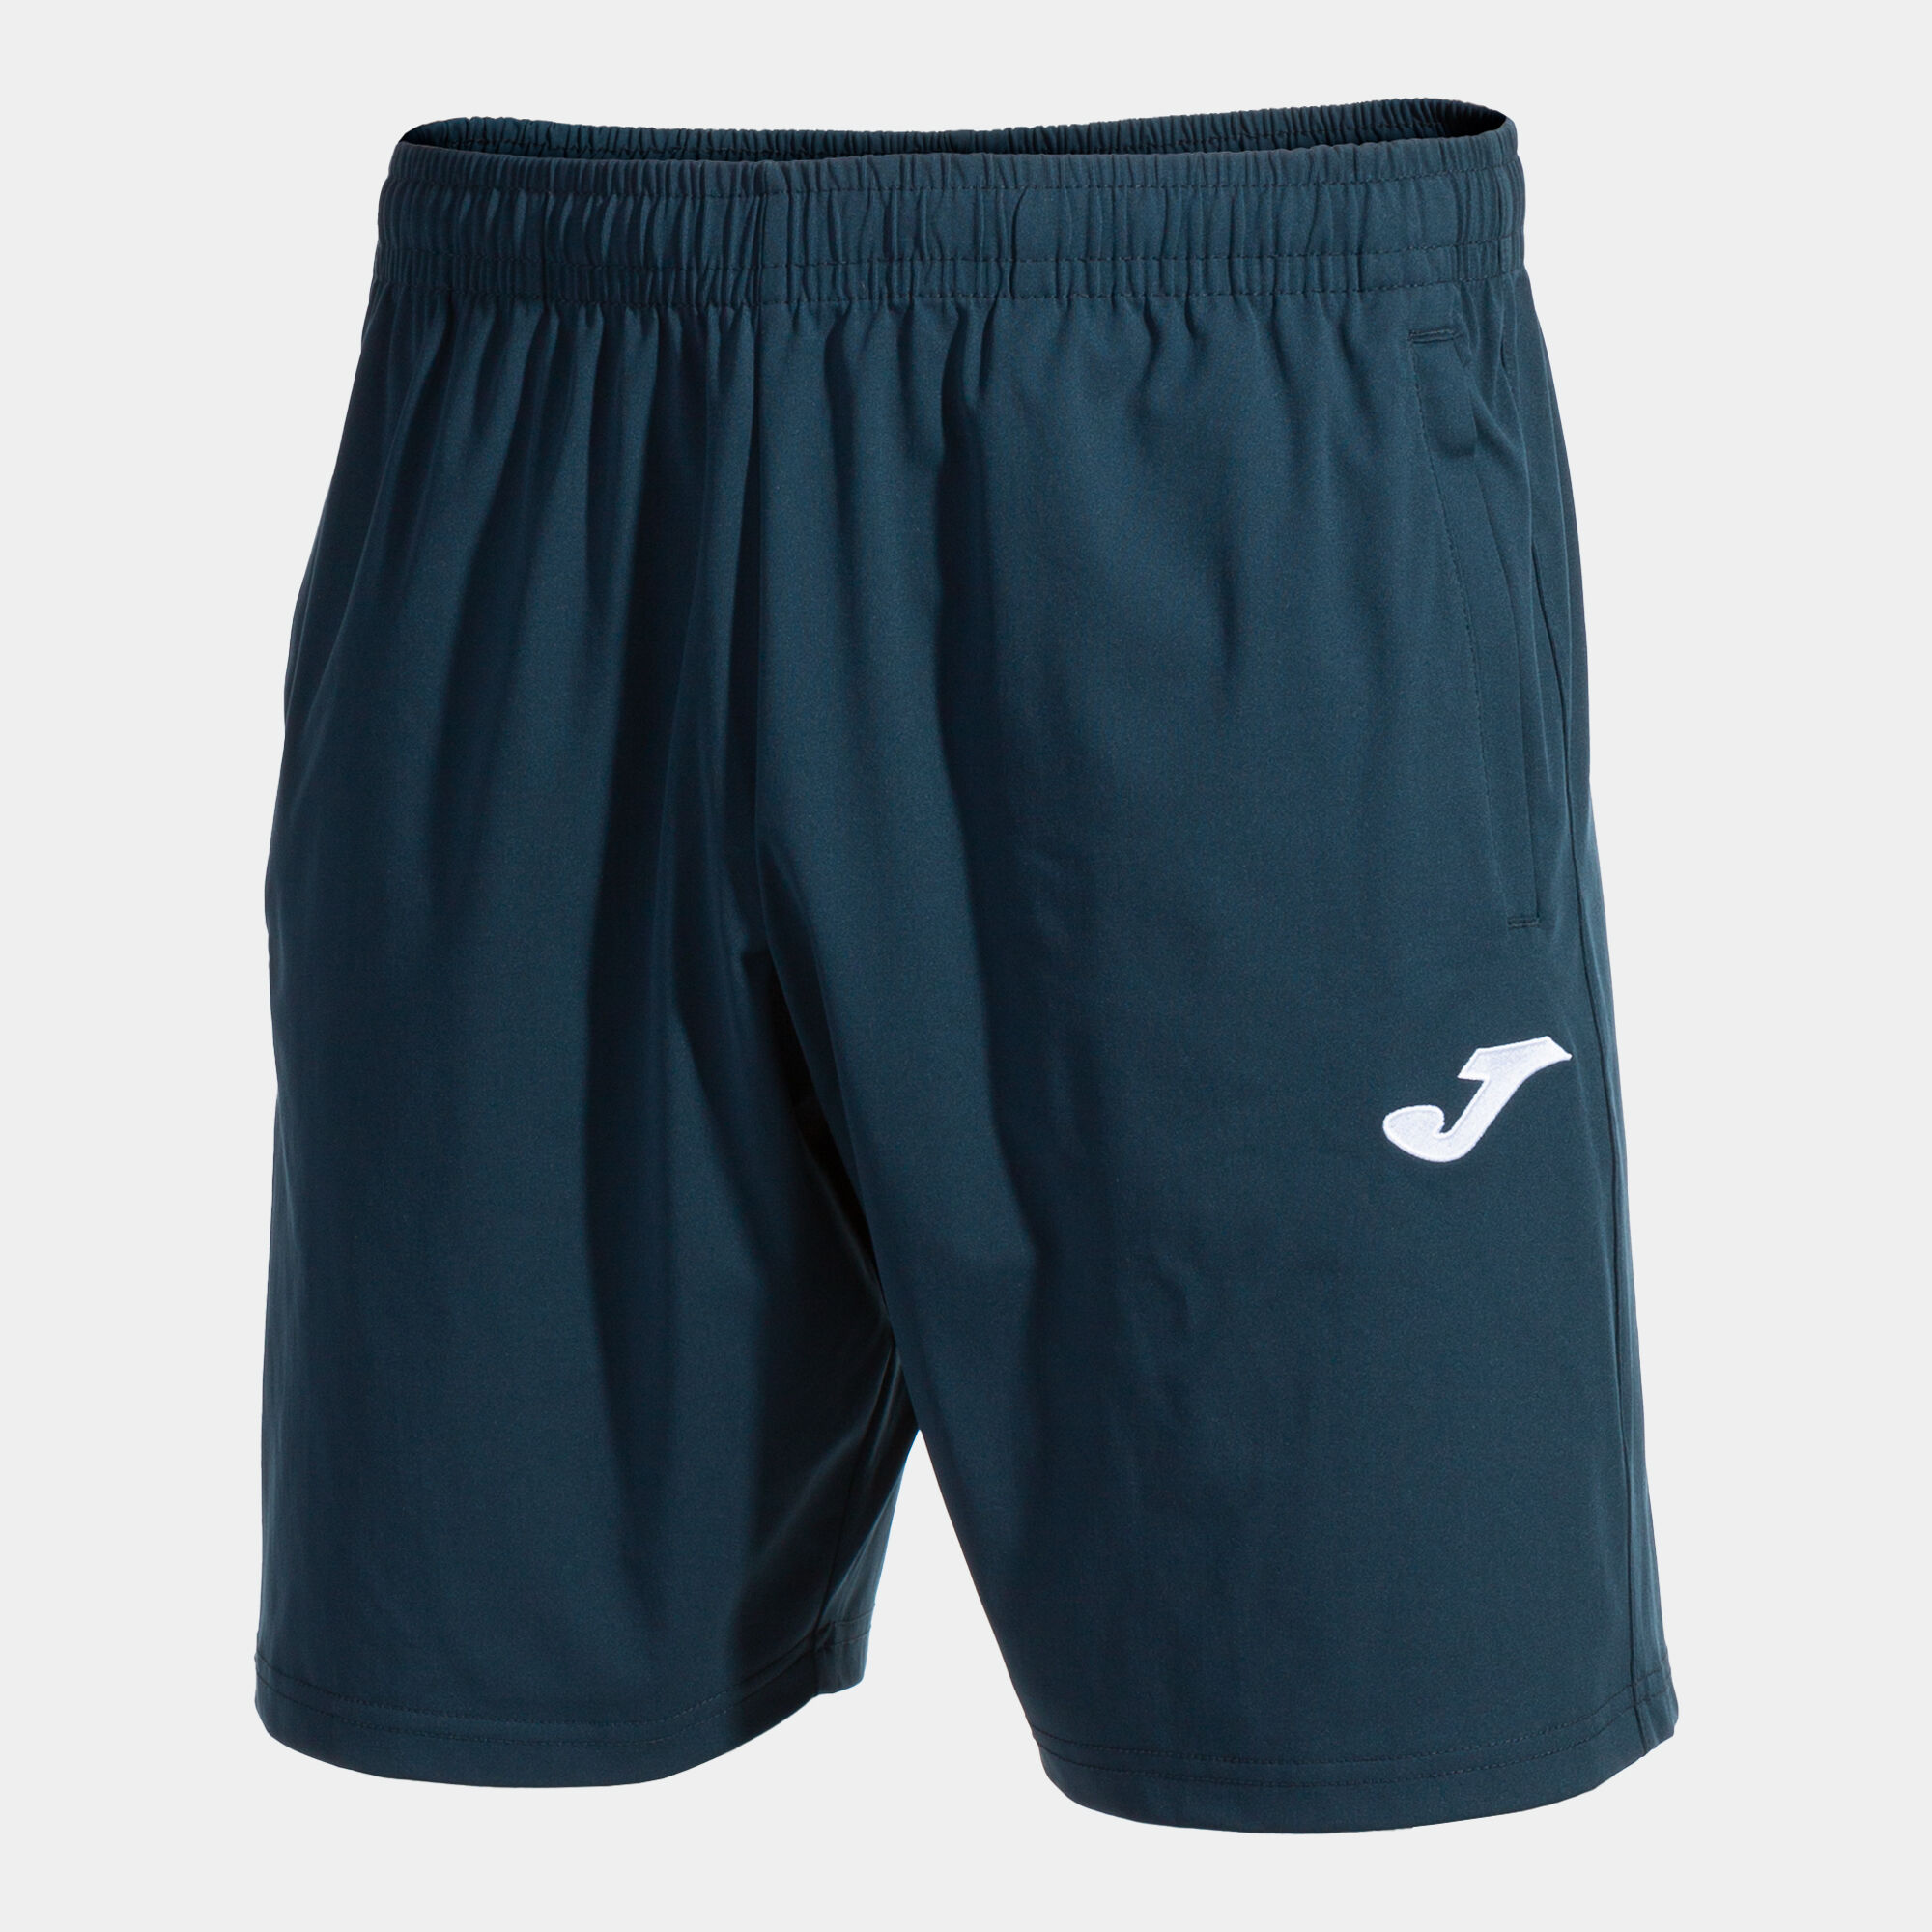 Bermuda shorts man Combi navy blue